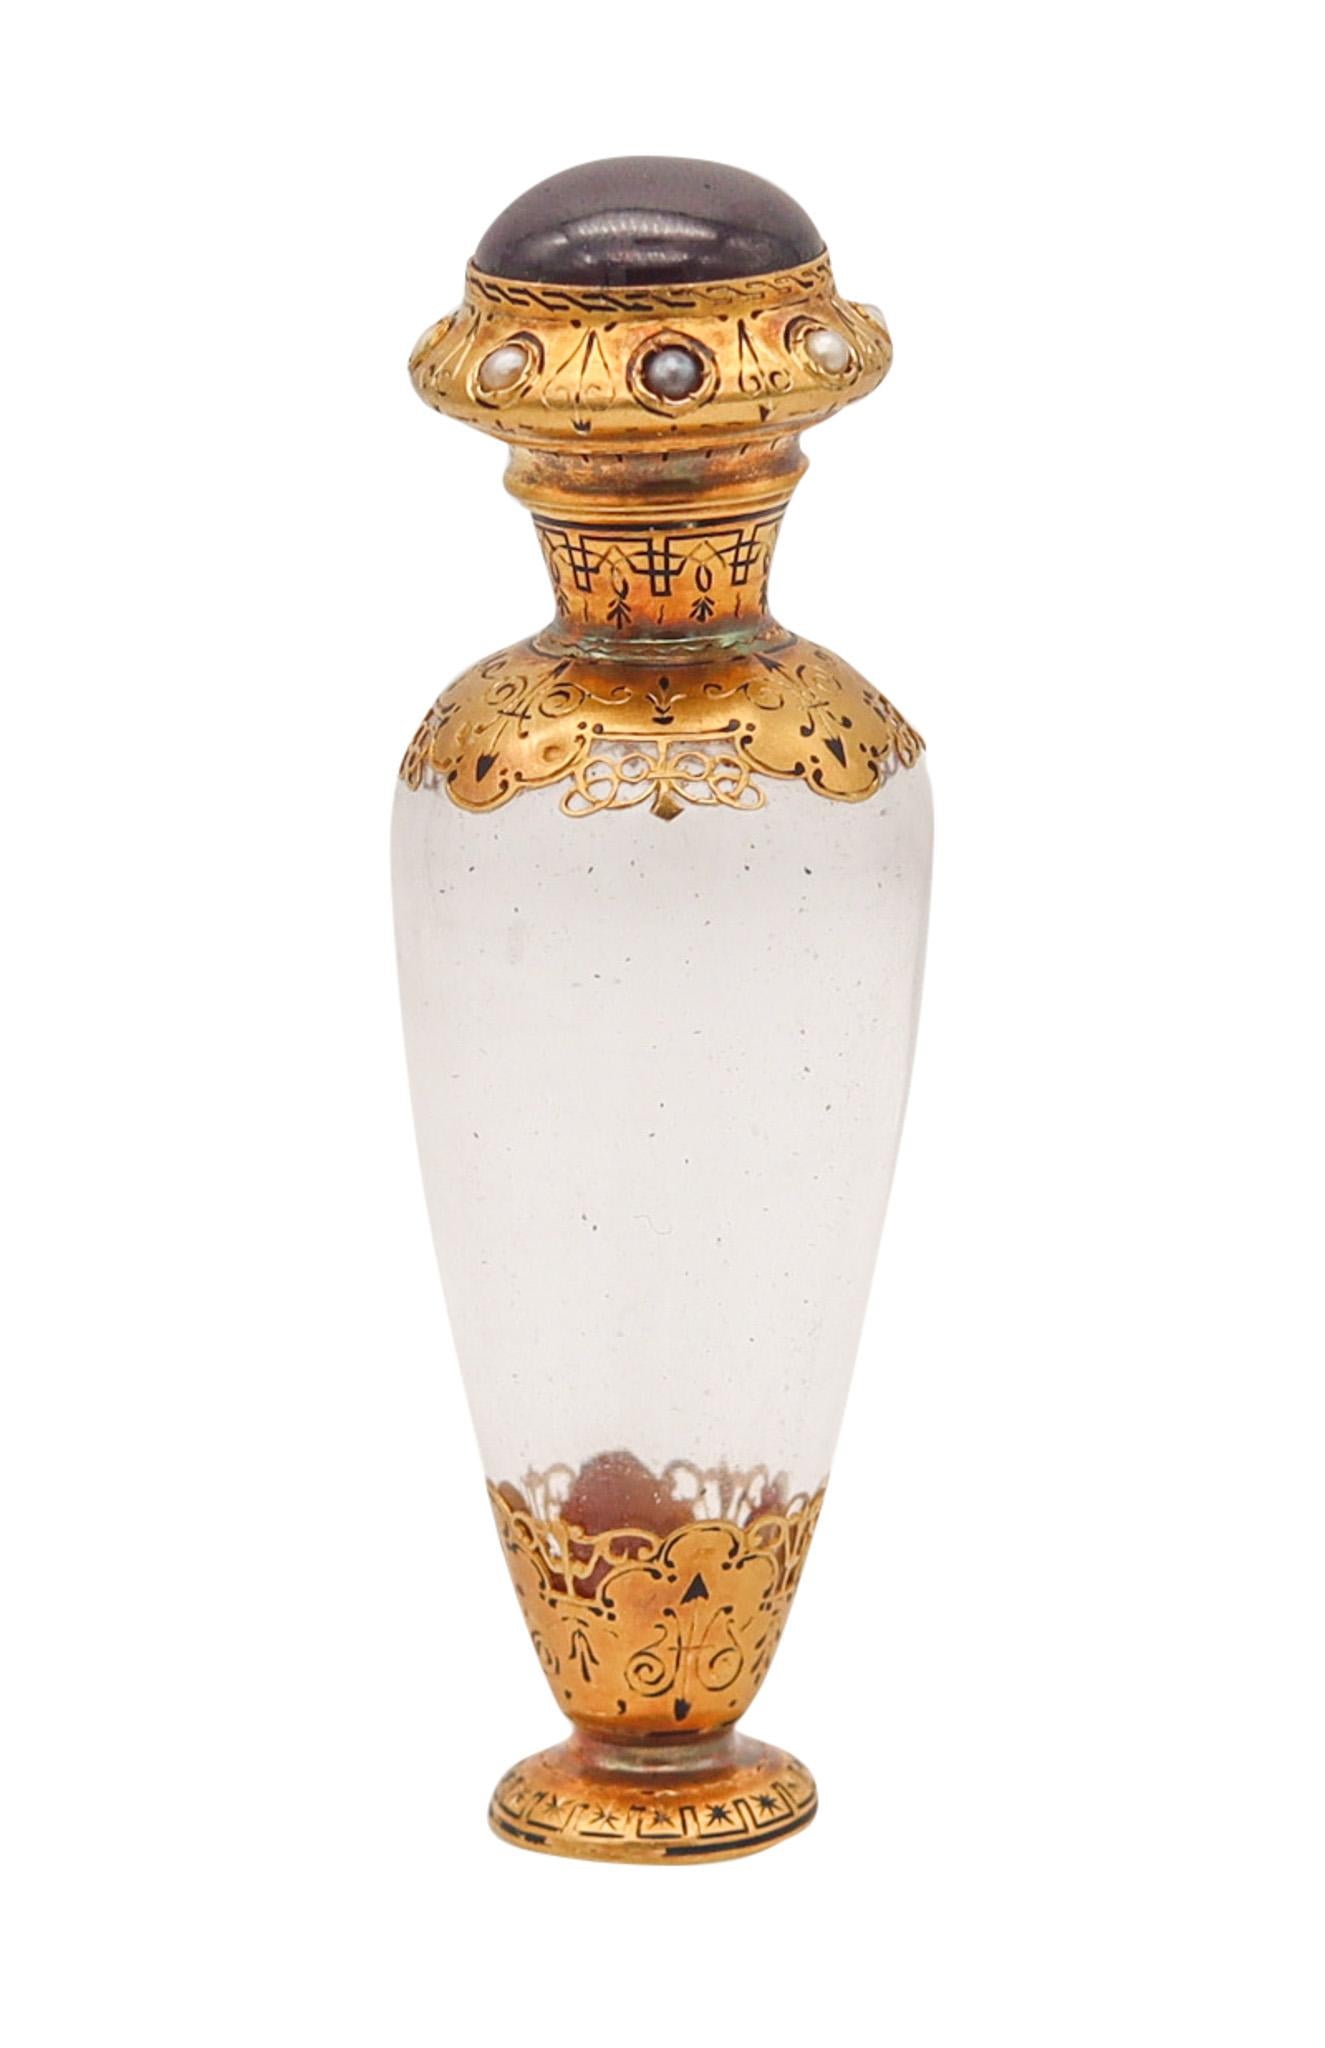 French 1870 Napoleon III Perfume Bottle Mount In 18Kt Yellow Gold With Gemstones